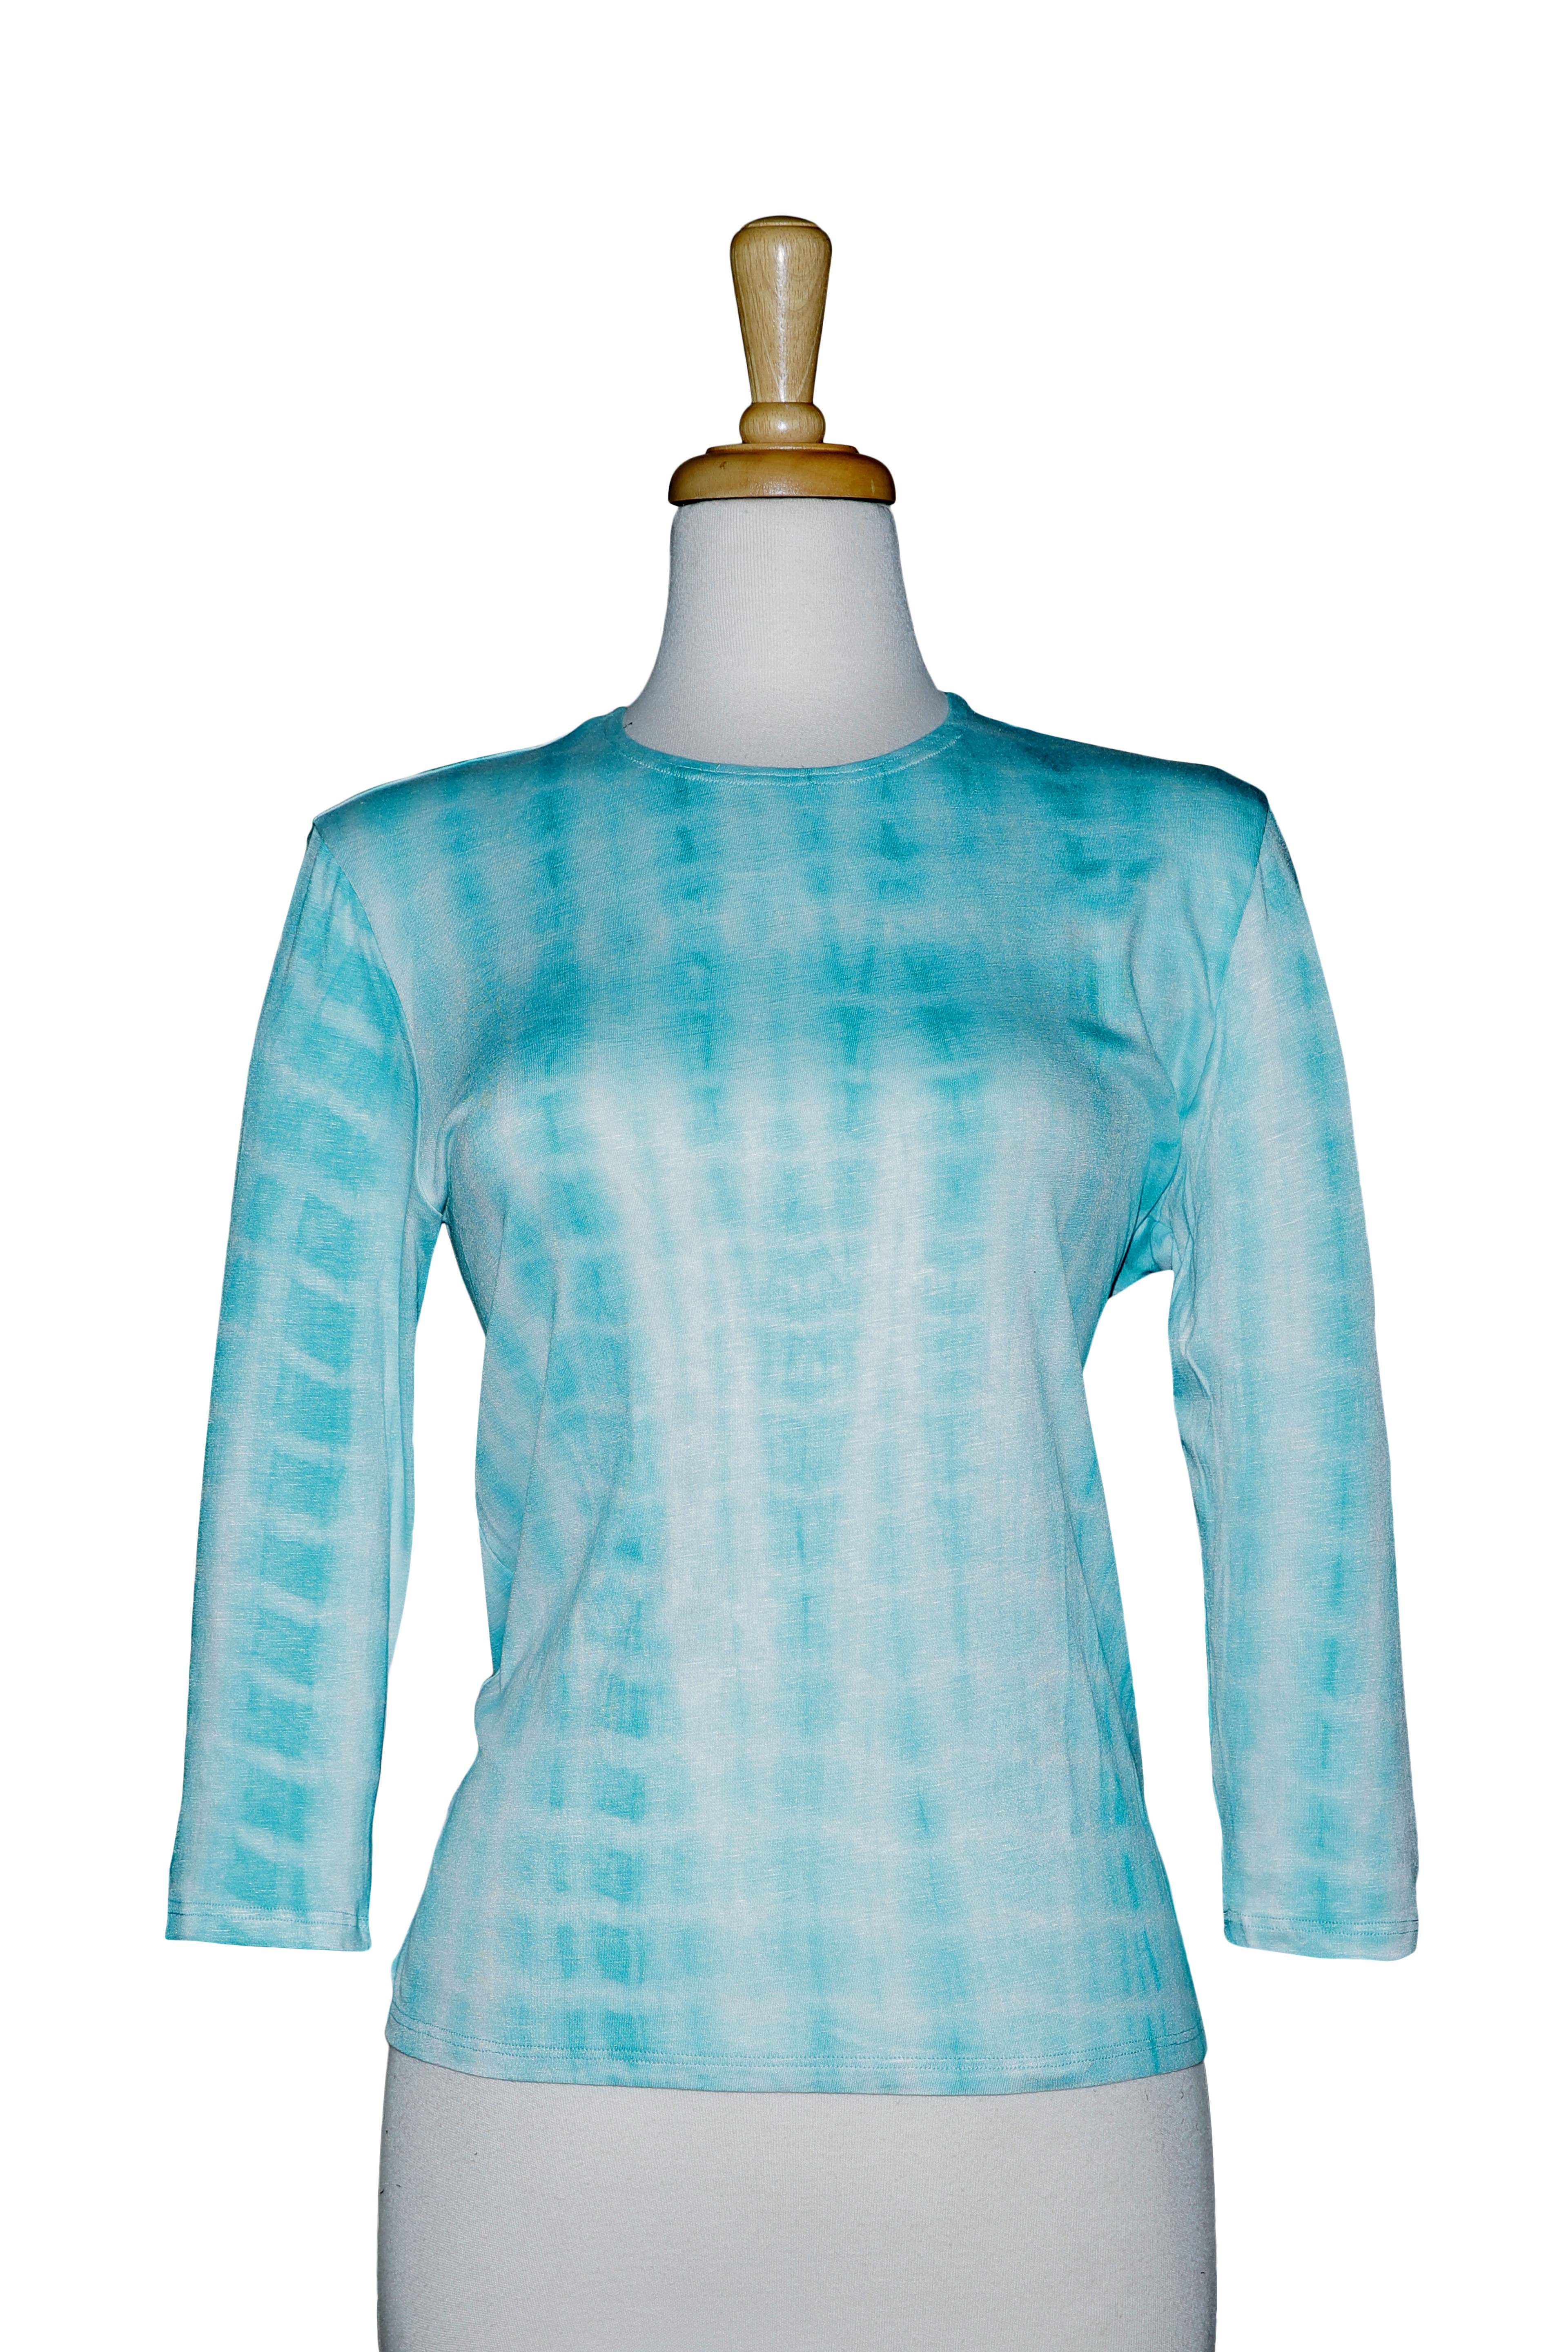 Soft Teal Tie Dye 3/4 Sleeve Cotton Top - Long Sleeve Tops - TOPS